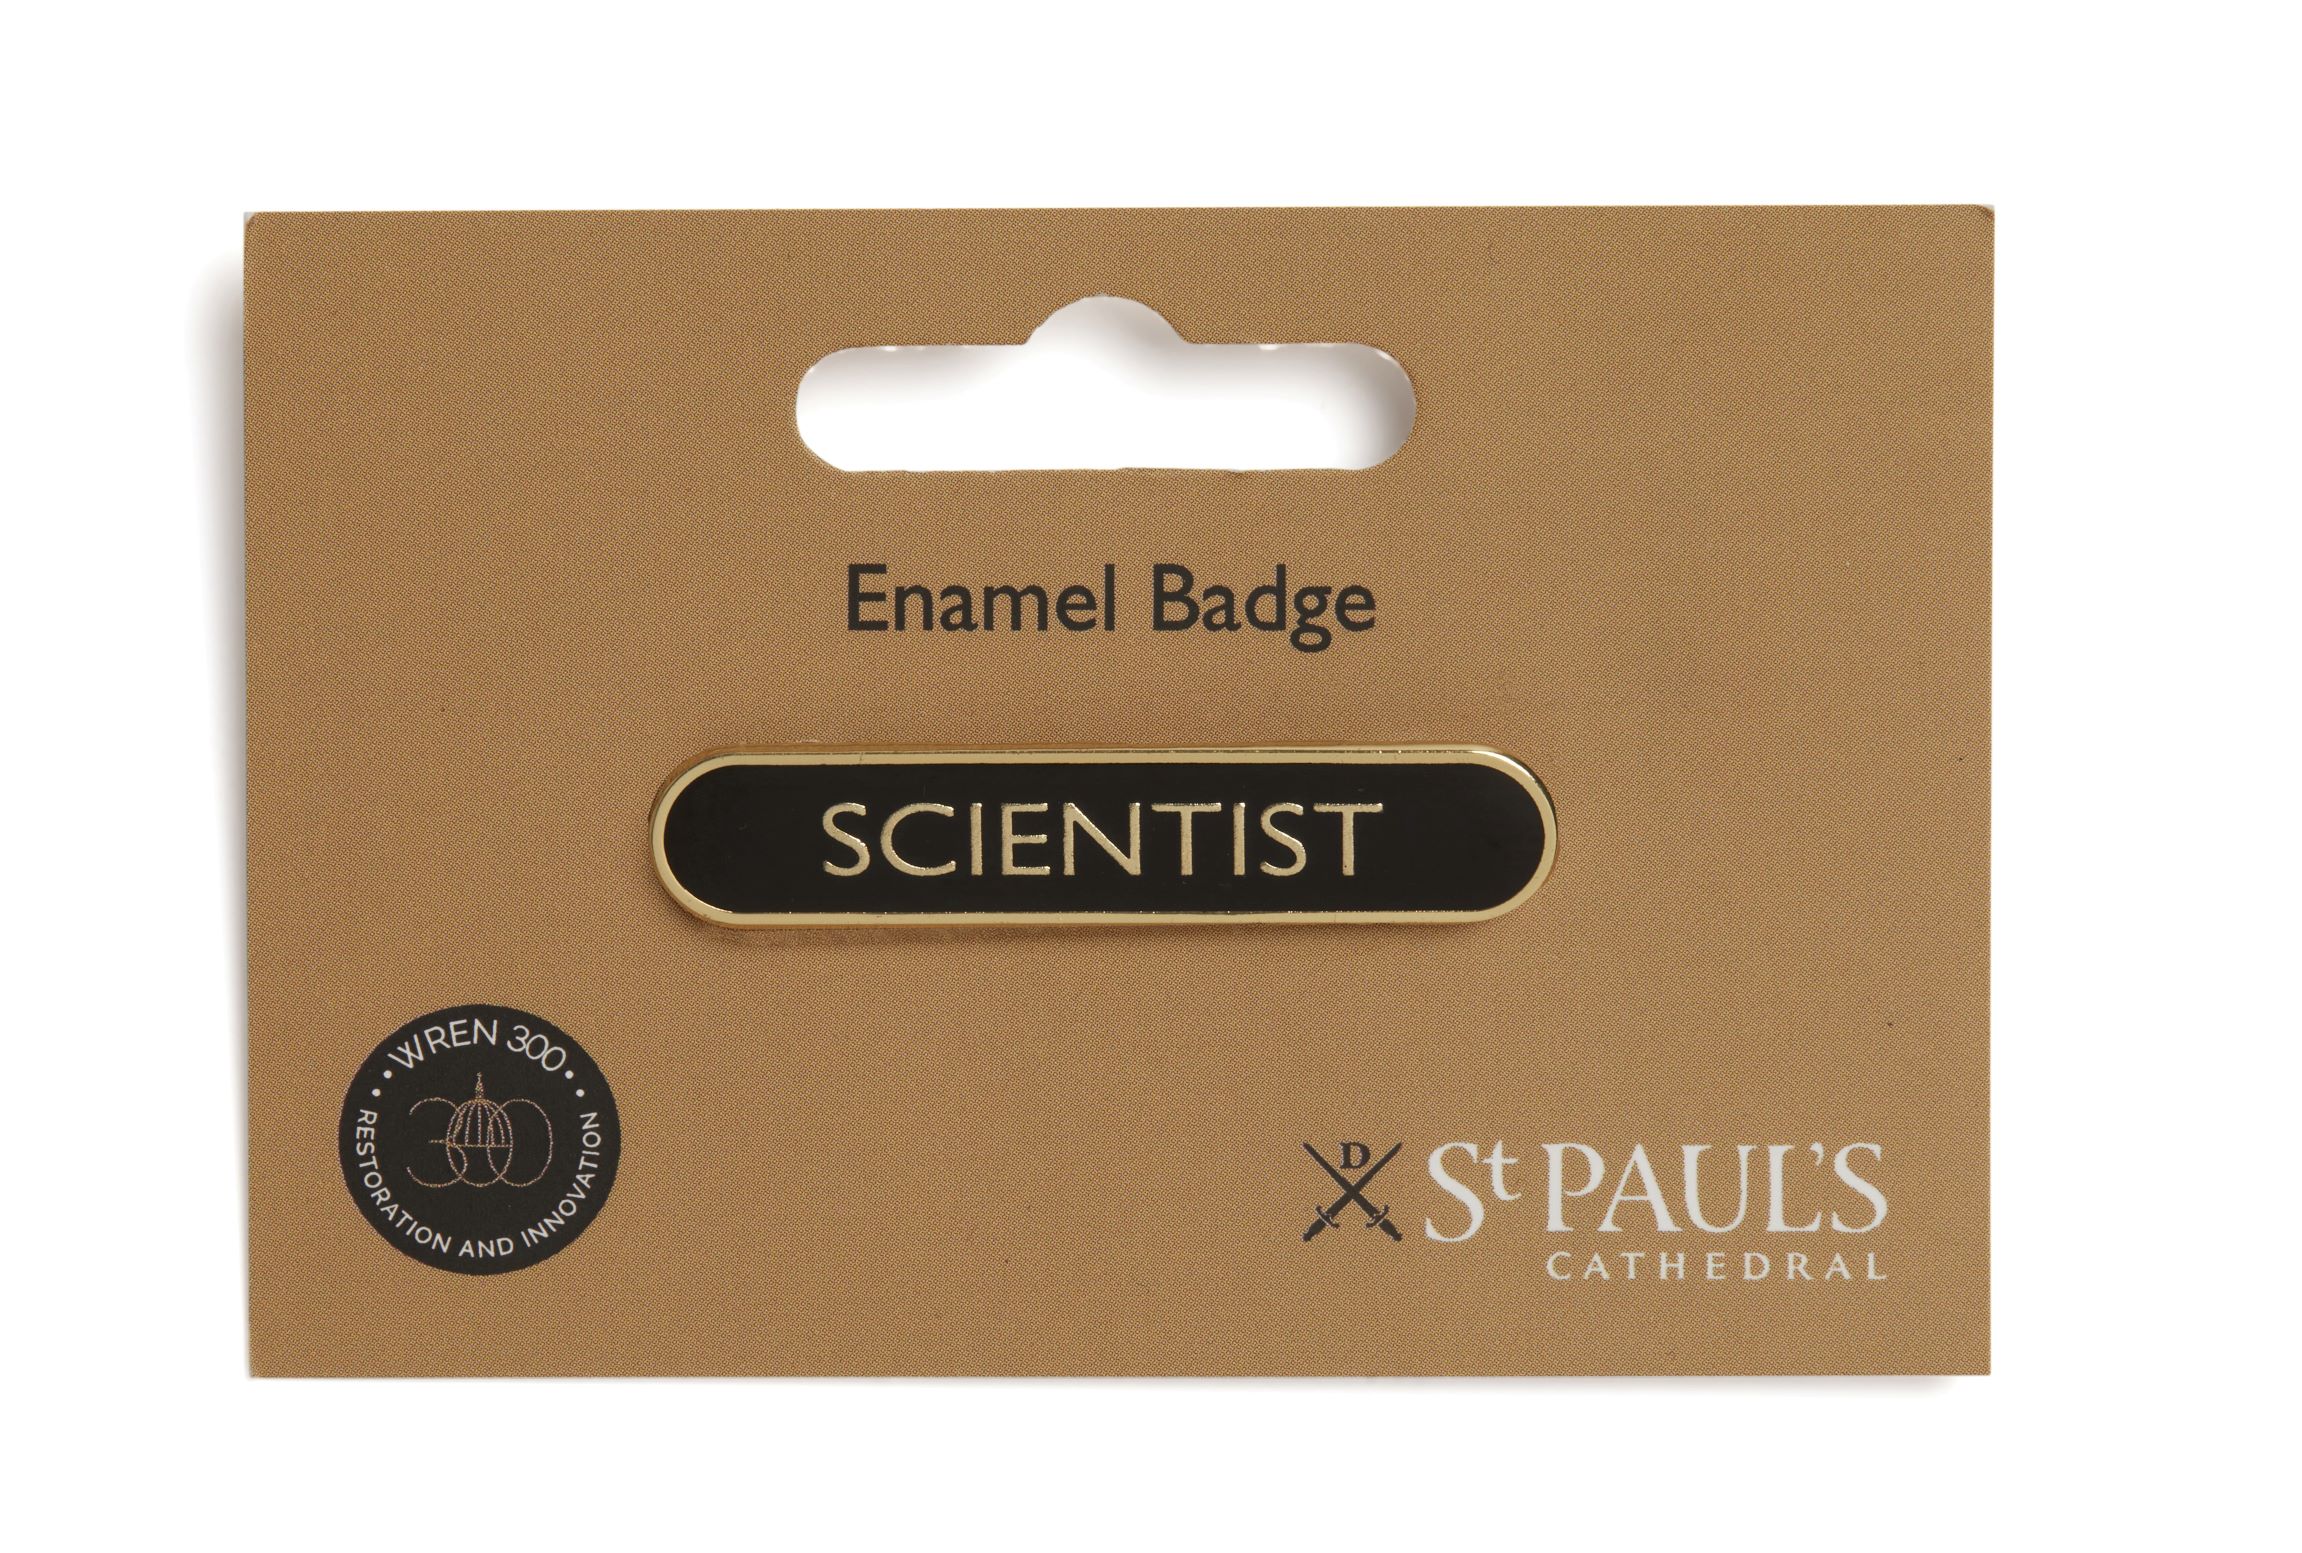 Wren 300 Scientist Enamel Badge. St Paul's Cathedral